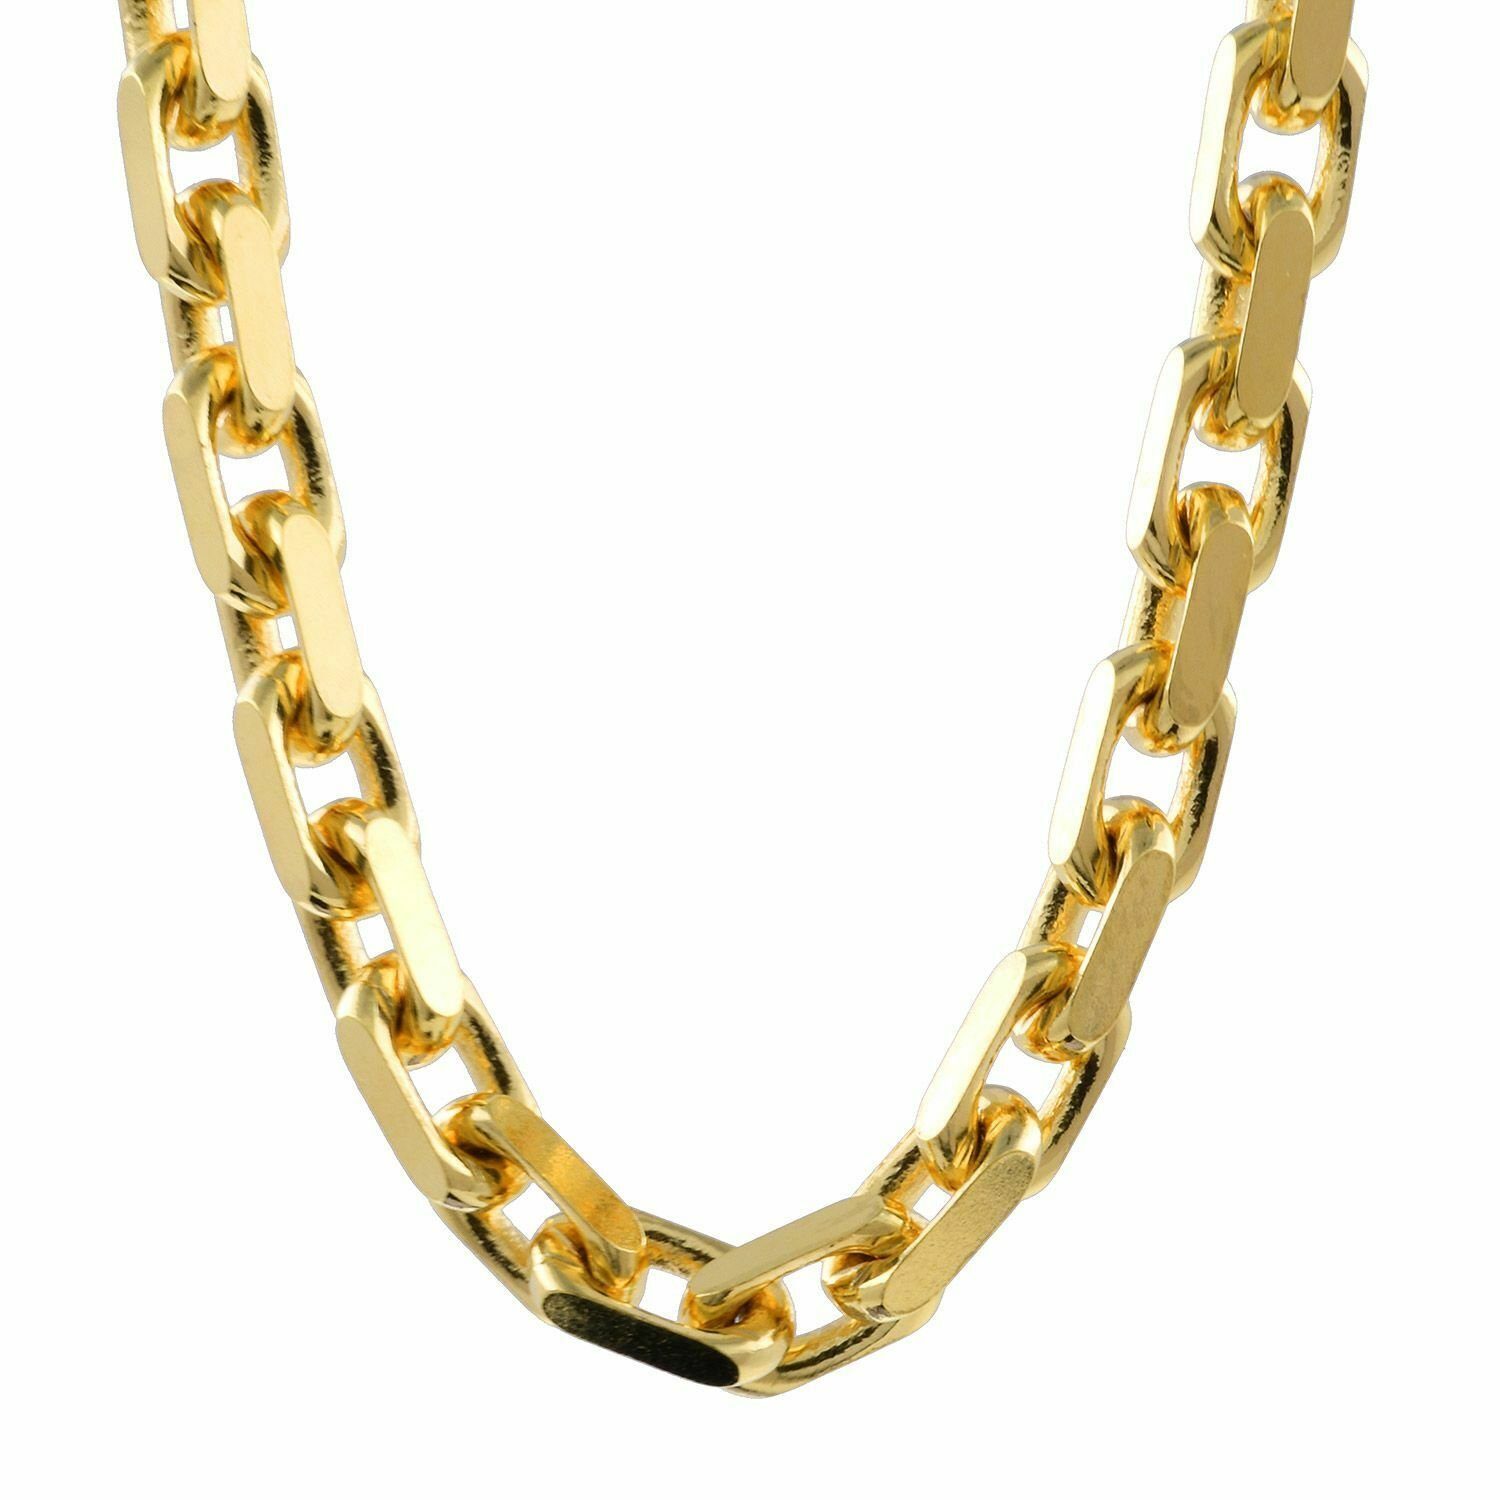 HOPLO Goldkette Ankerkette diamantiert 750 - 18 Karat Gold 3,0 mm Kettenlänge 50 cm (inkl. Schmuckbox), Made in Germany | Ketten ohne Anhänger